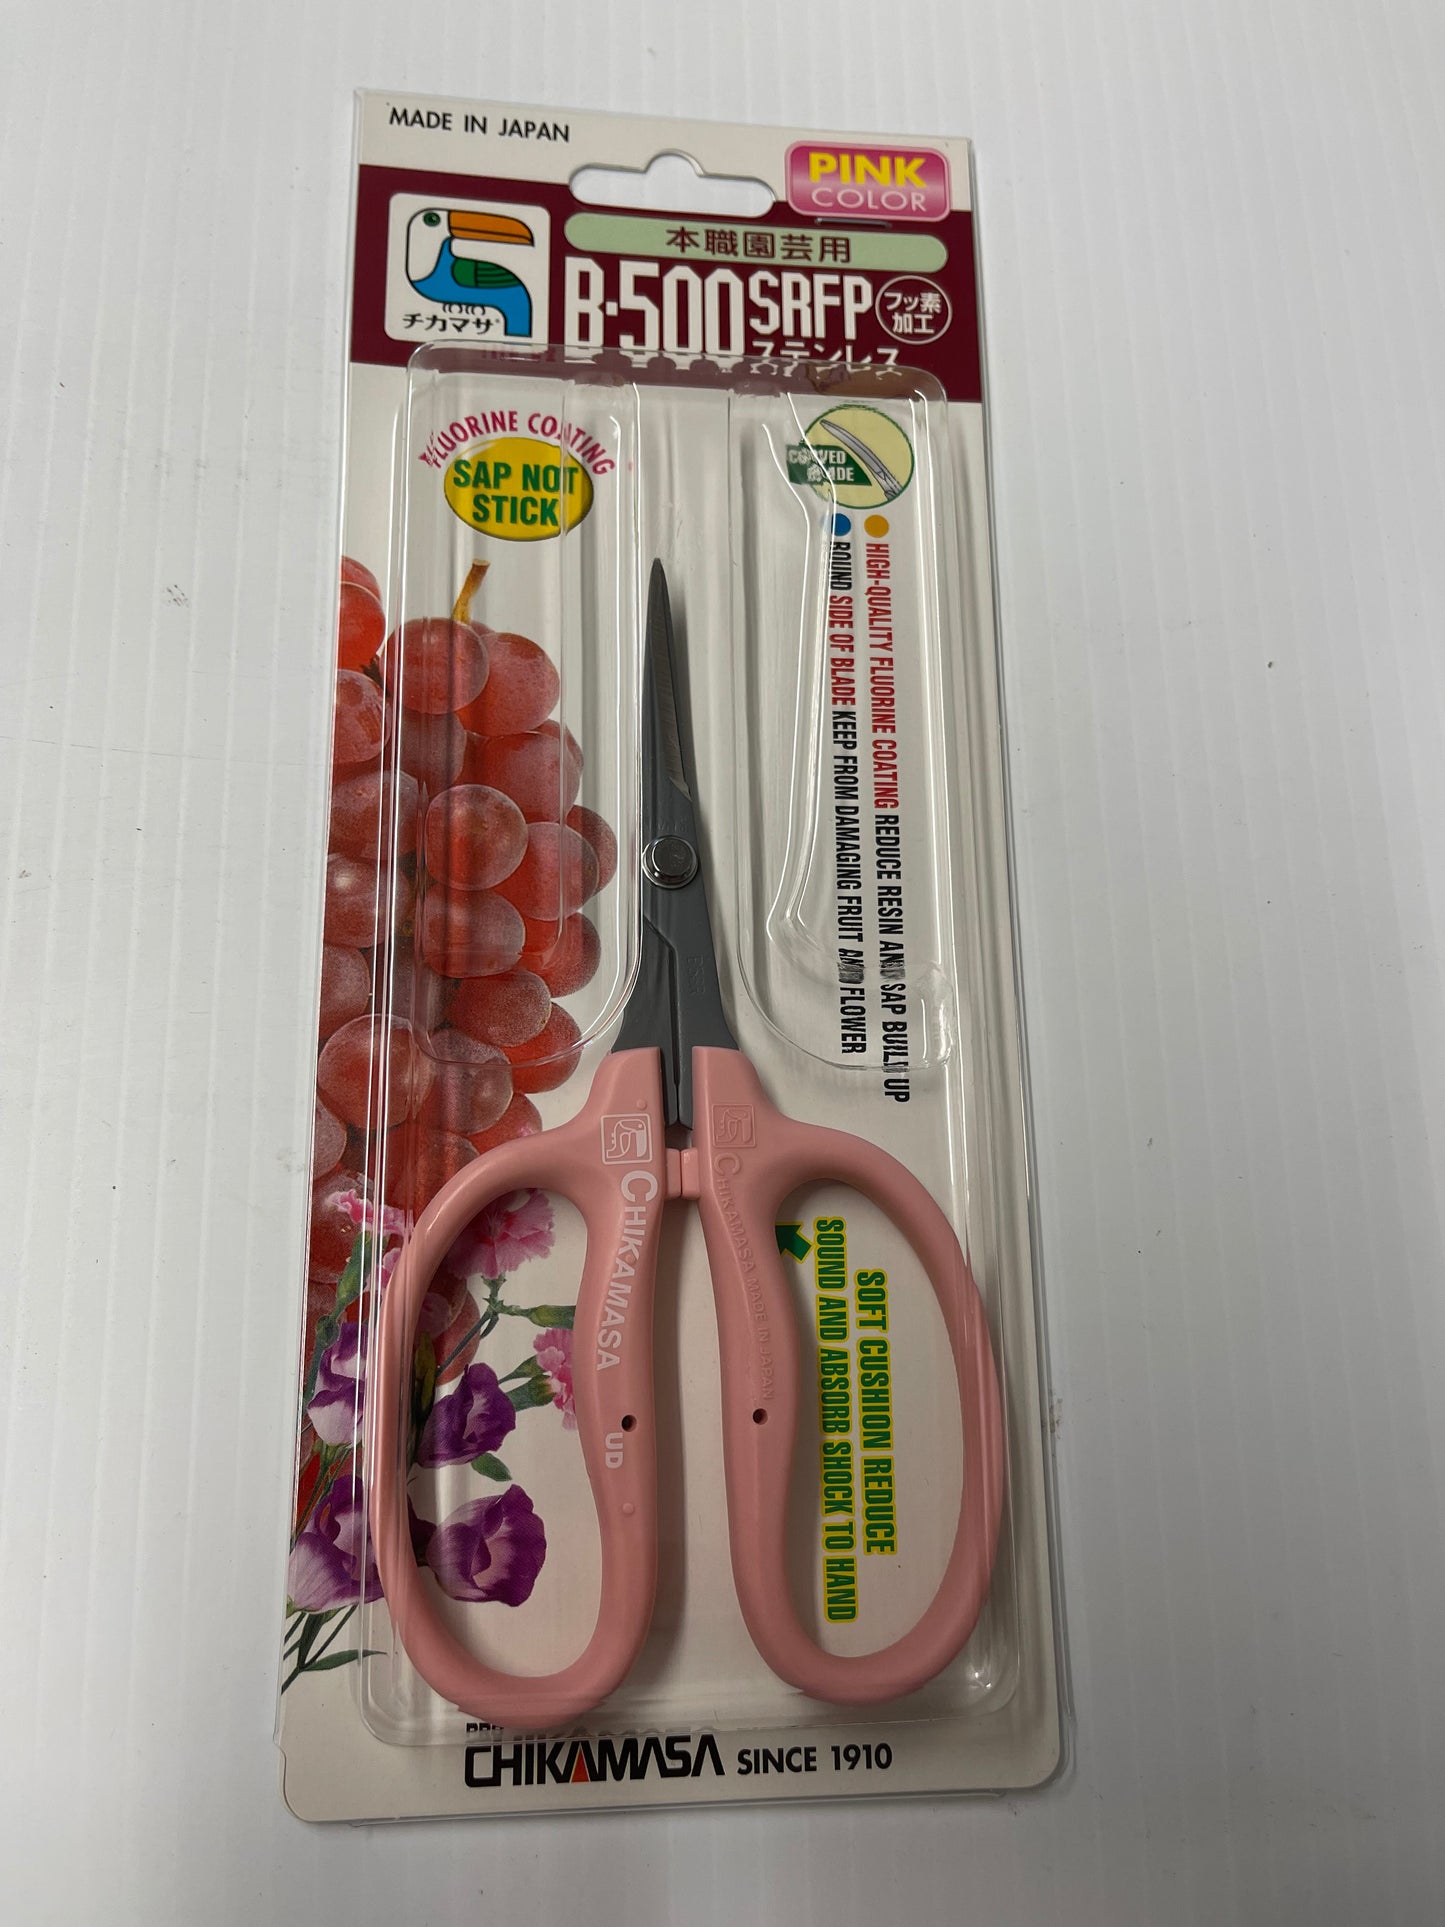 Chikamasa B-500SRFP Pink Coated Curved Blade Scissors